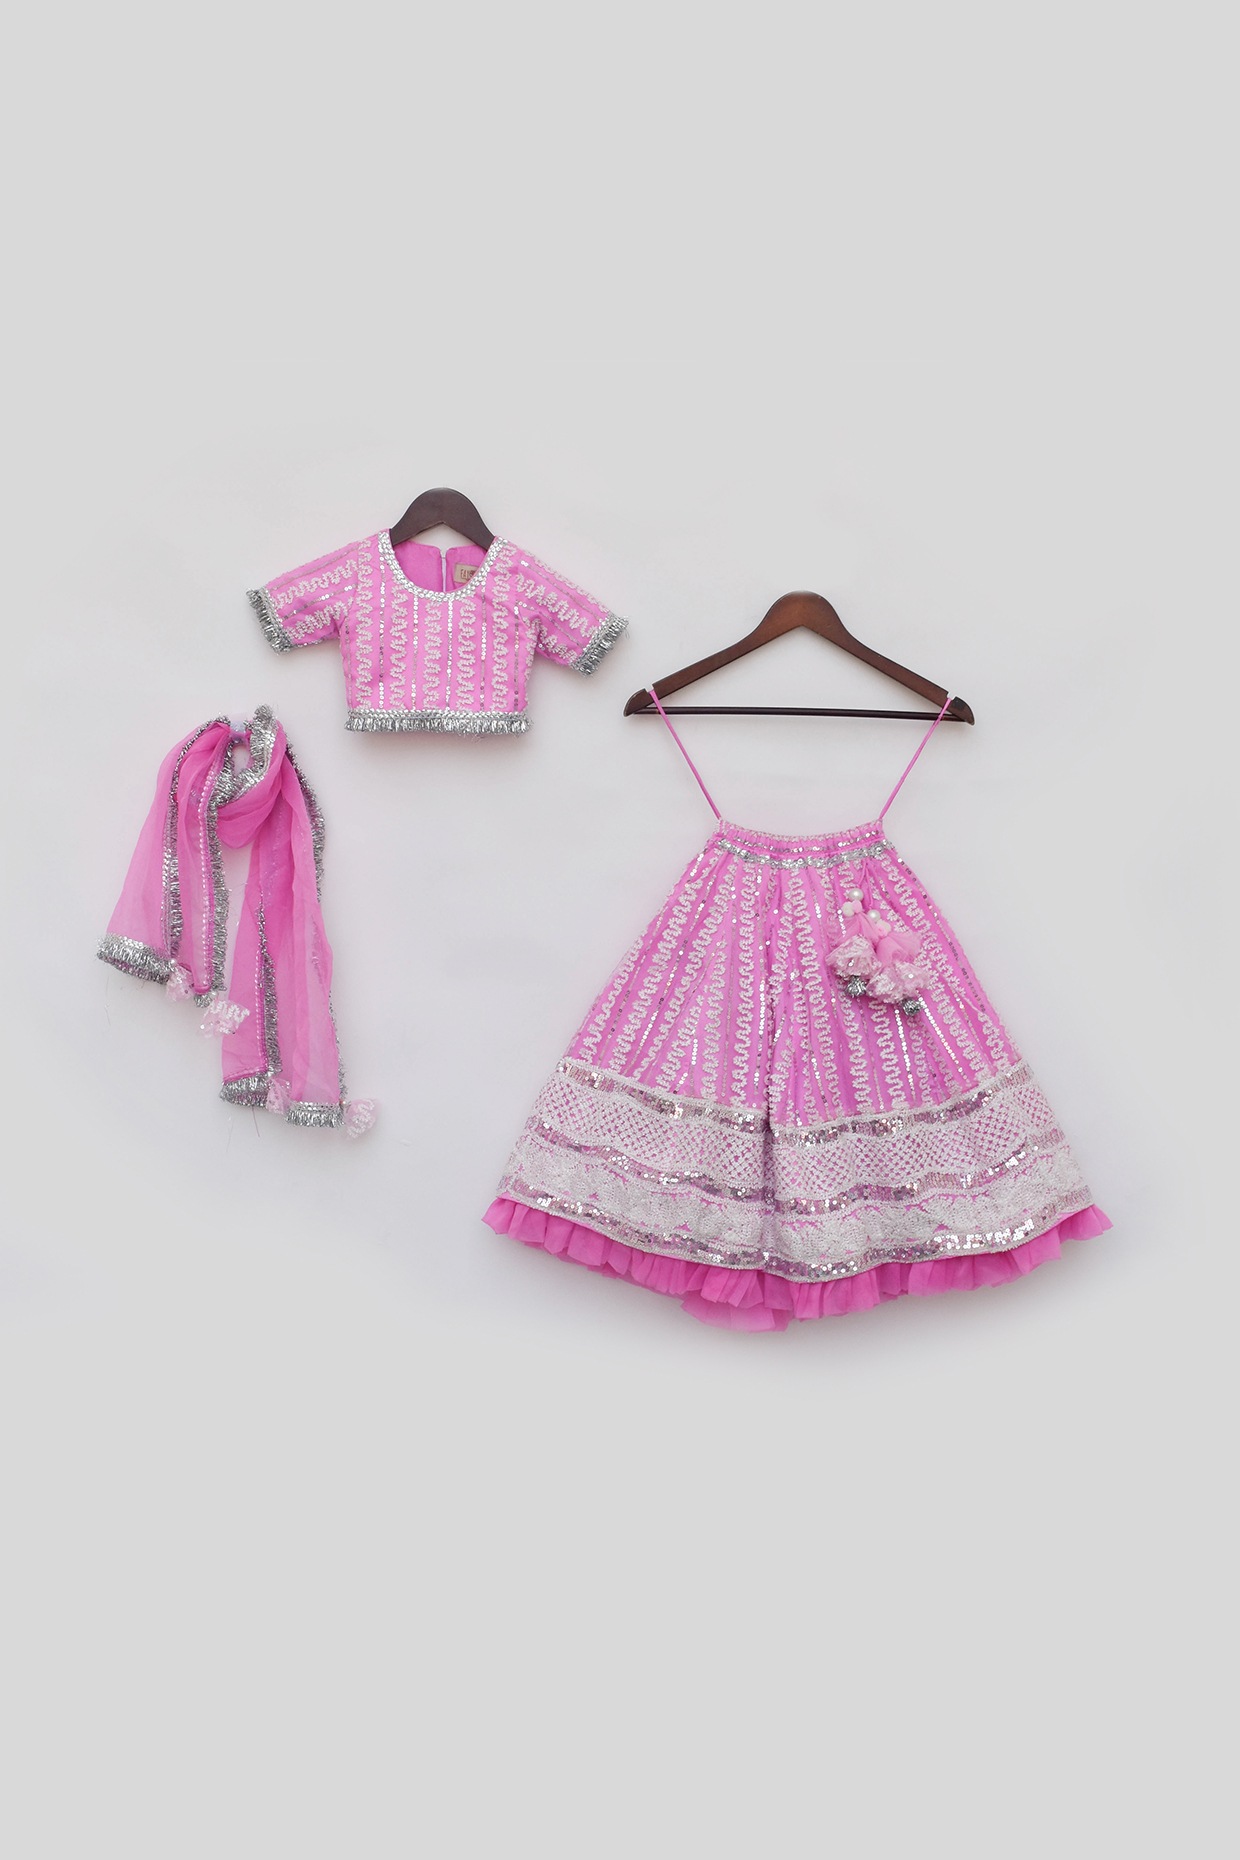 Party Wear Plain Net Beautiful Flower Frill Work Girls Lehenga Choli 616 -  Pink at Rs 1475/piece | Lehenga Choli in Surat | ID: 25298661655